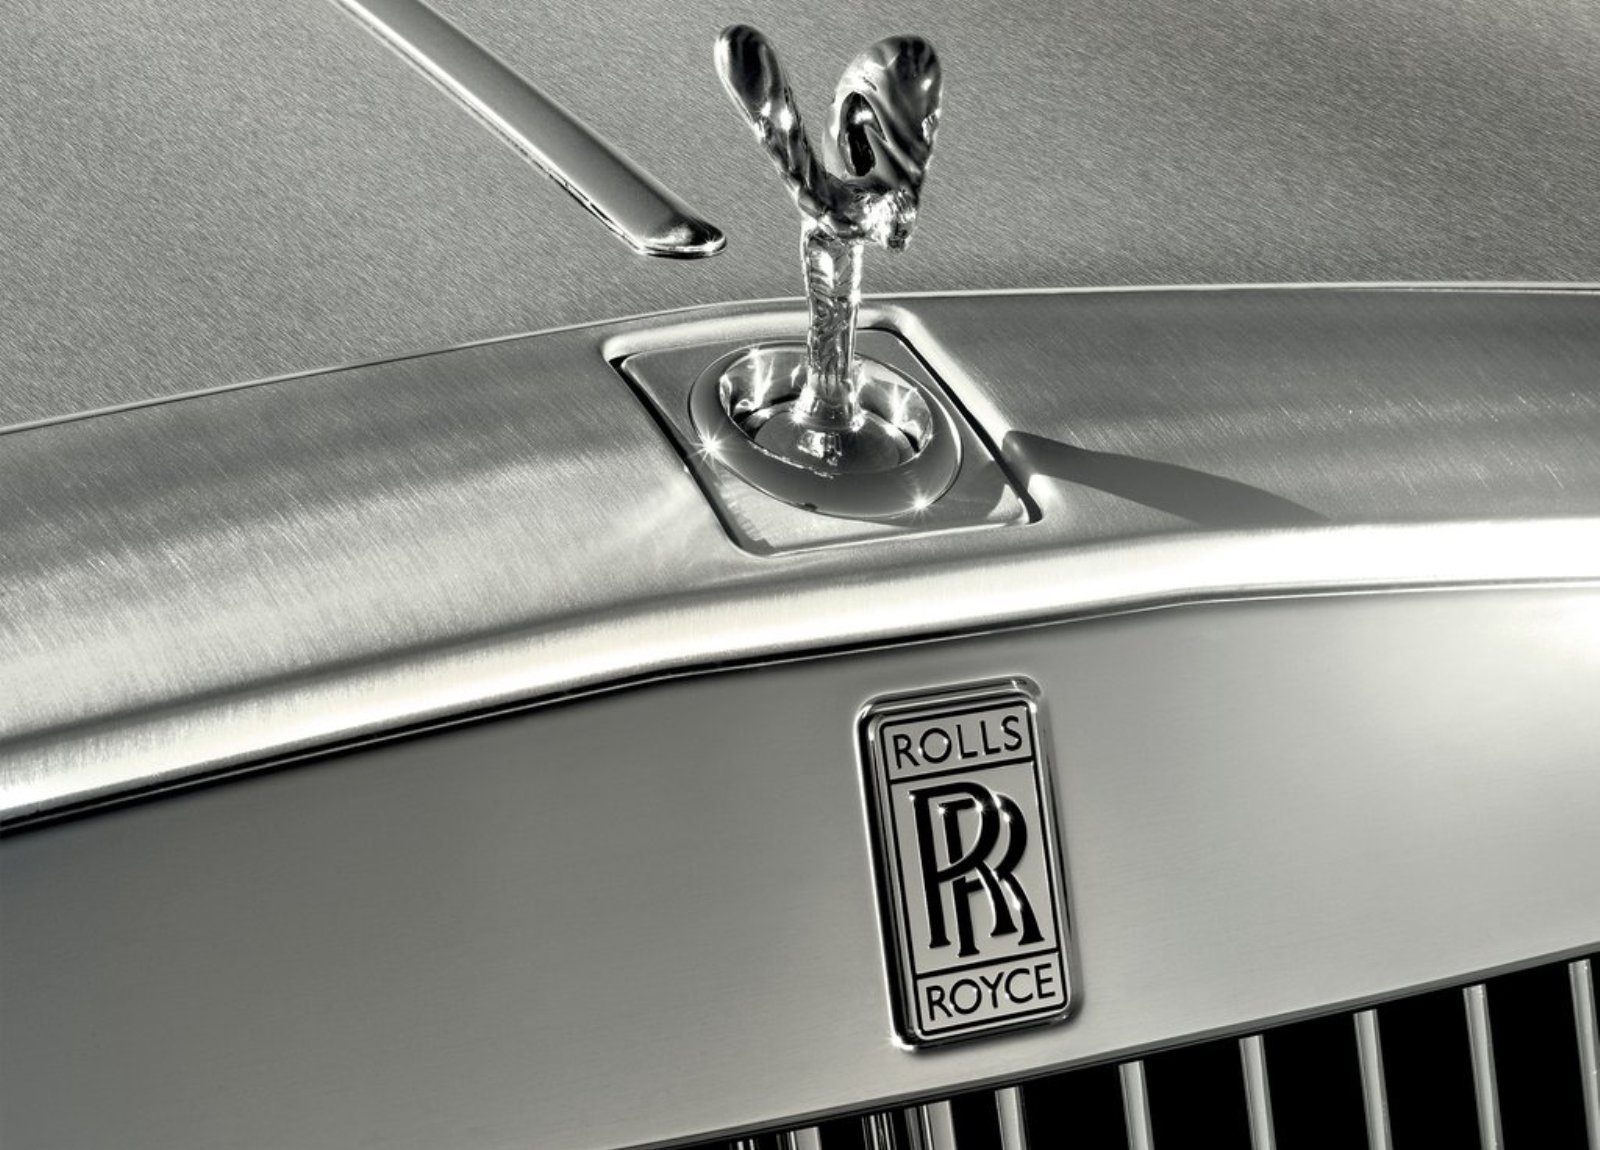 The Heritage of Rolls-Royce